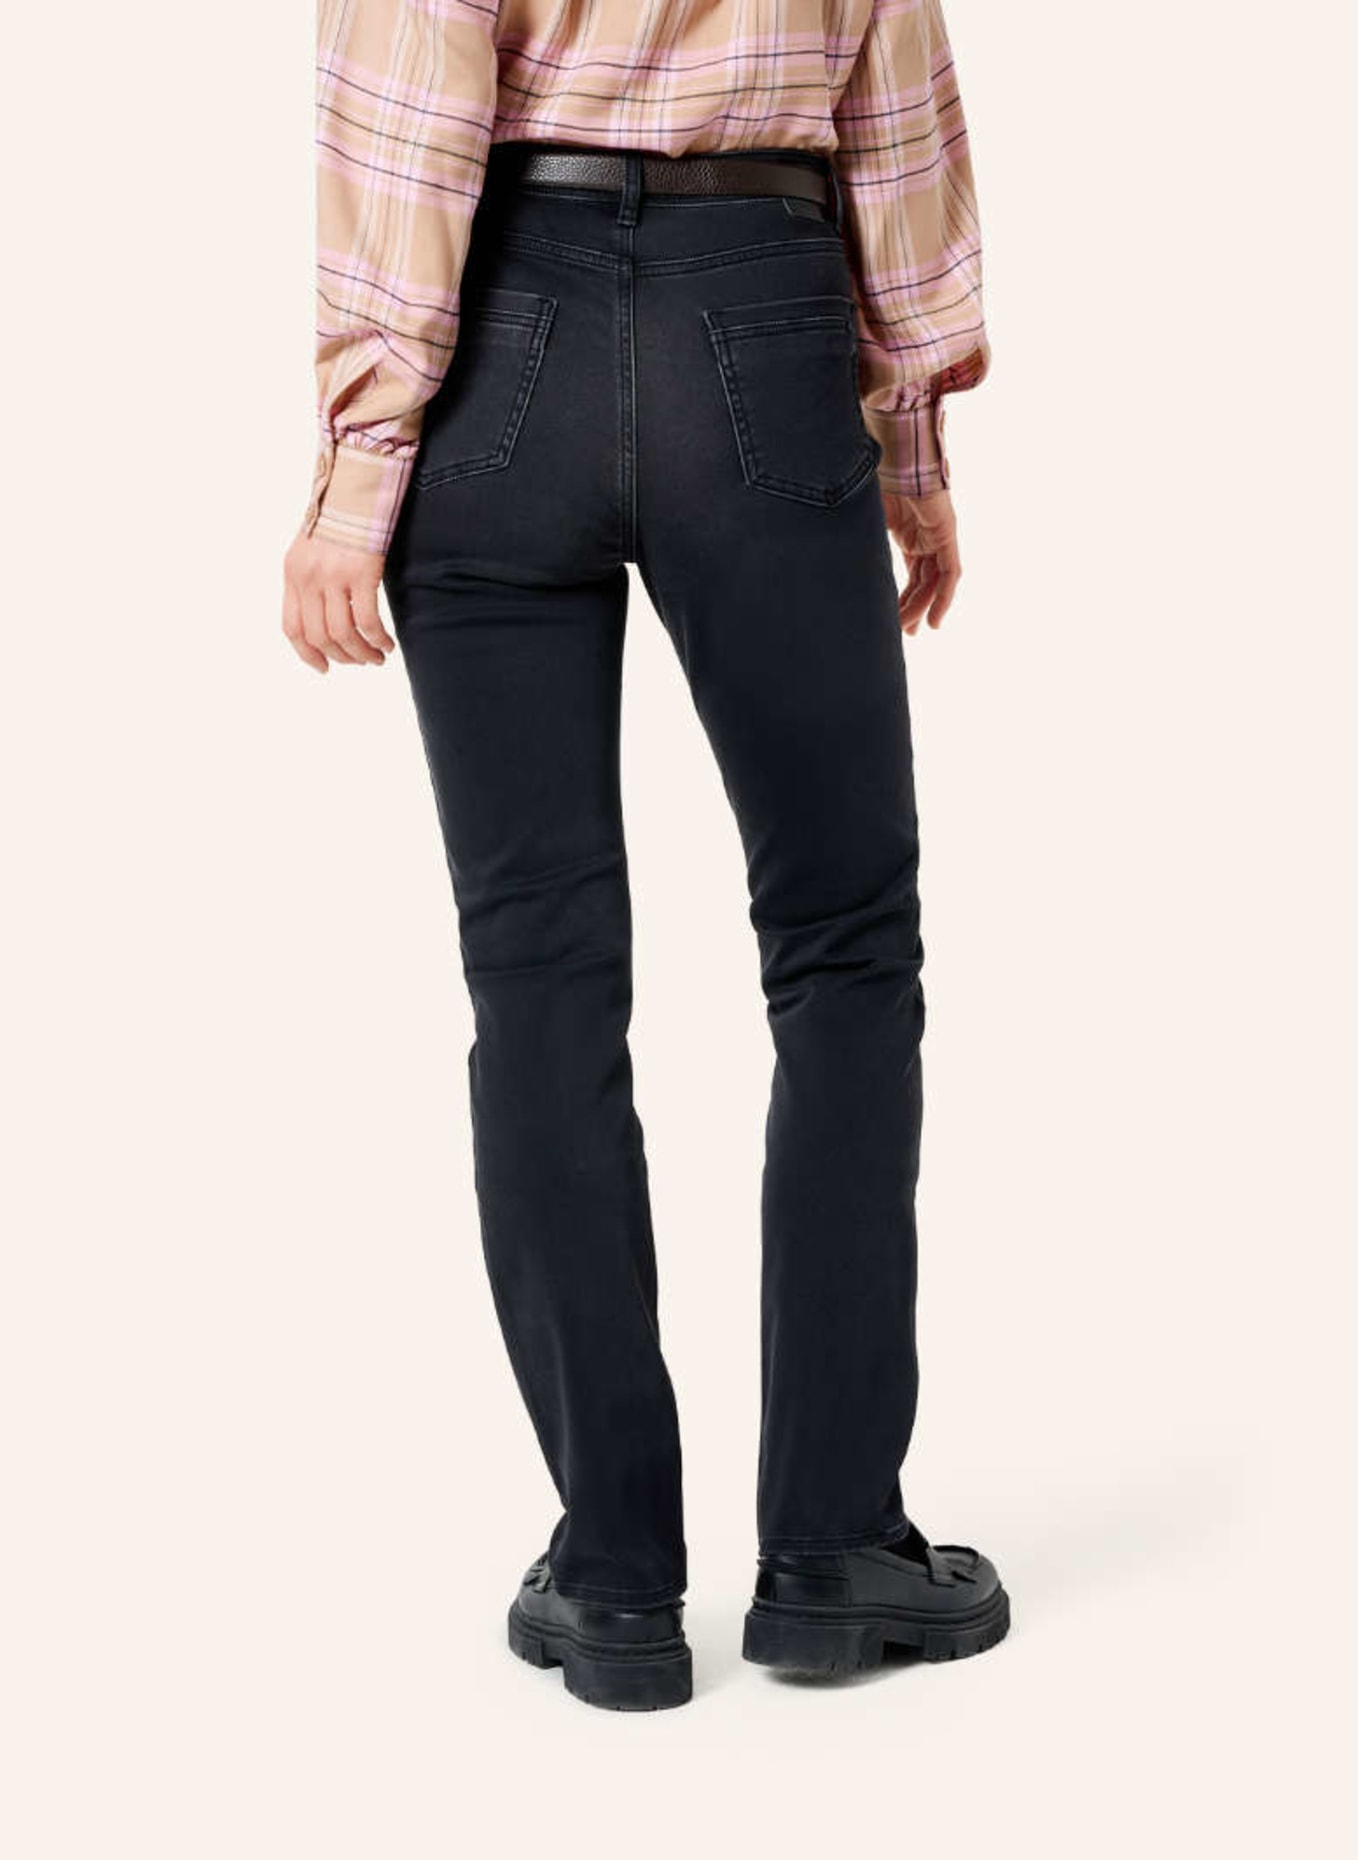 STYLE CAROLA in dunkelgrau BRAX Five-Pocket-Jeans